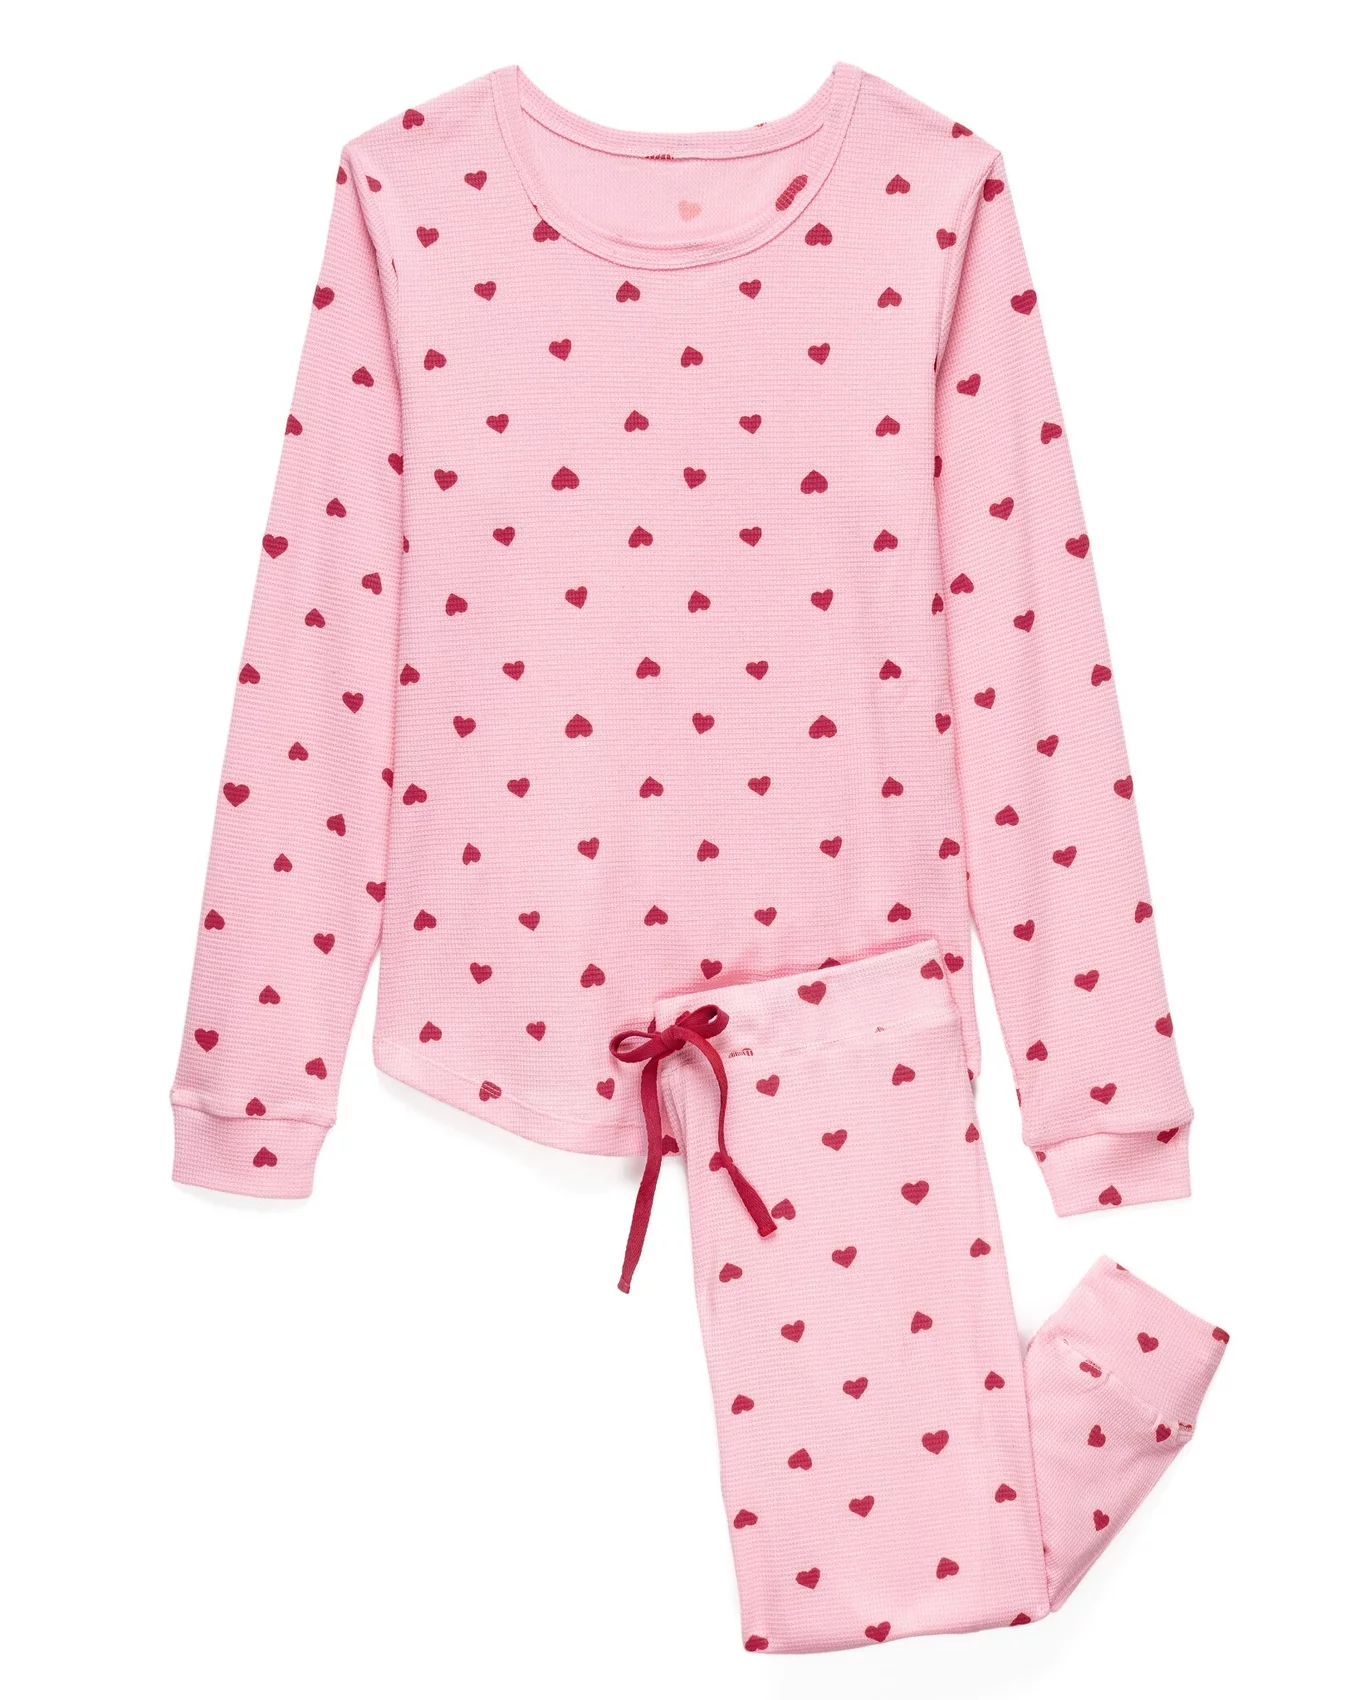 Muriel Heart Pink Plus Long Sleeve Top and Legging Set, XL-4X